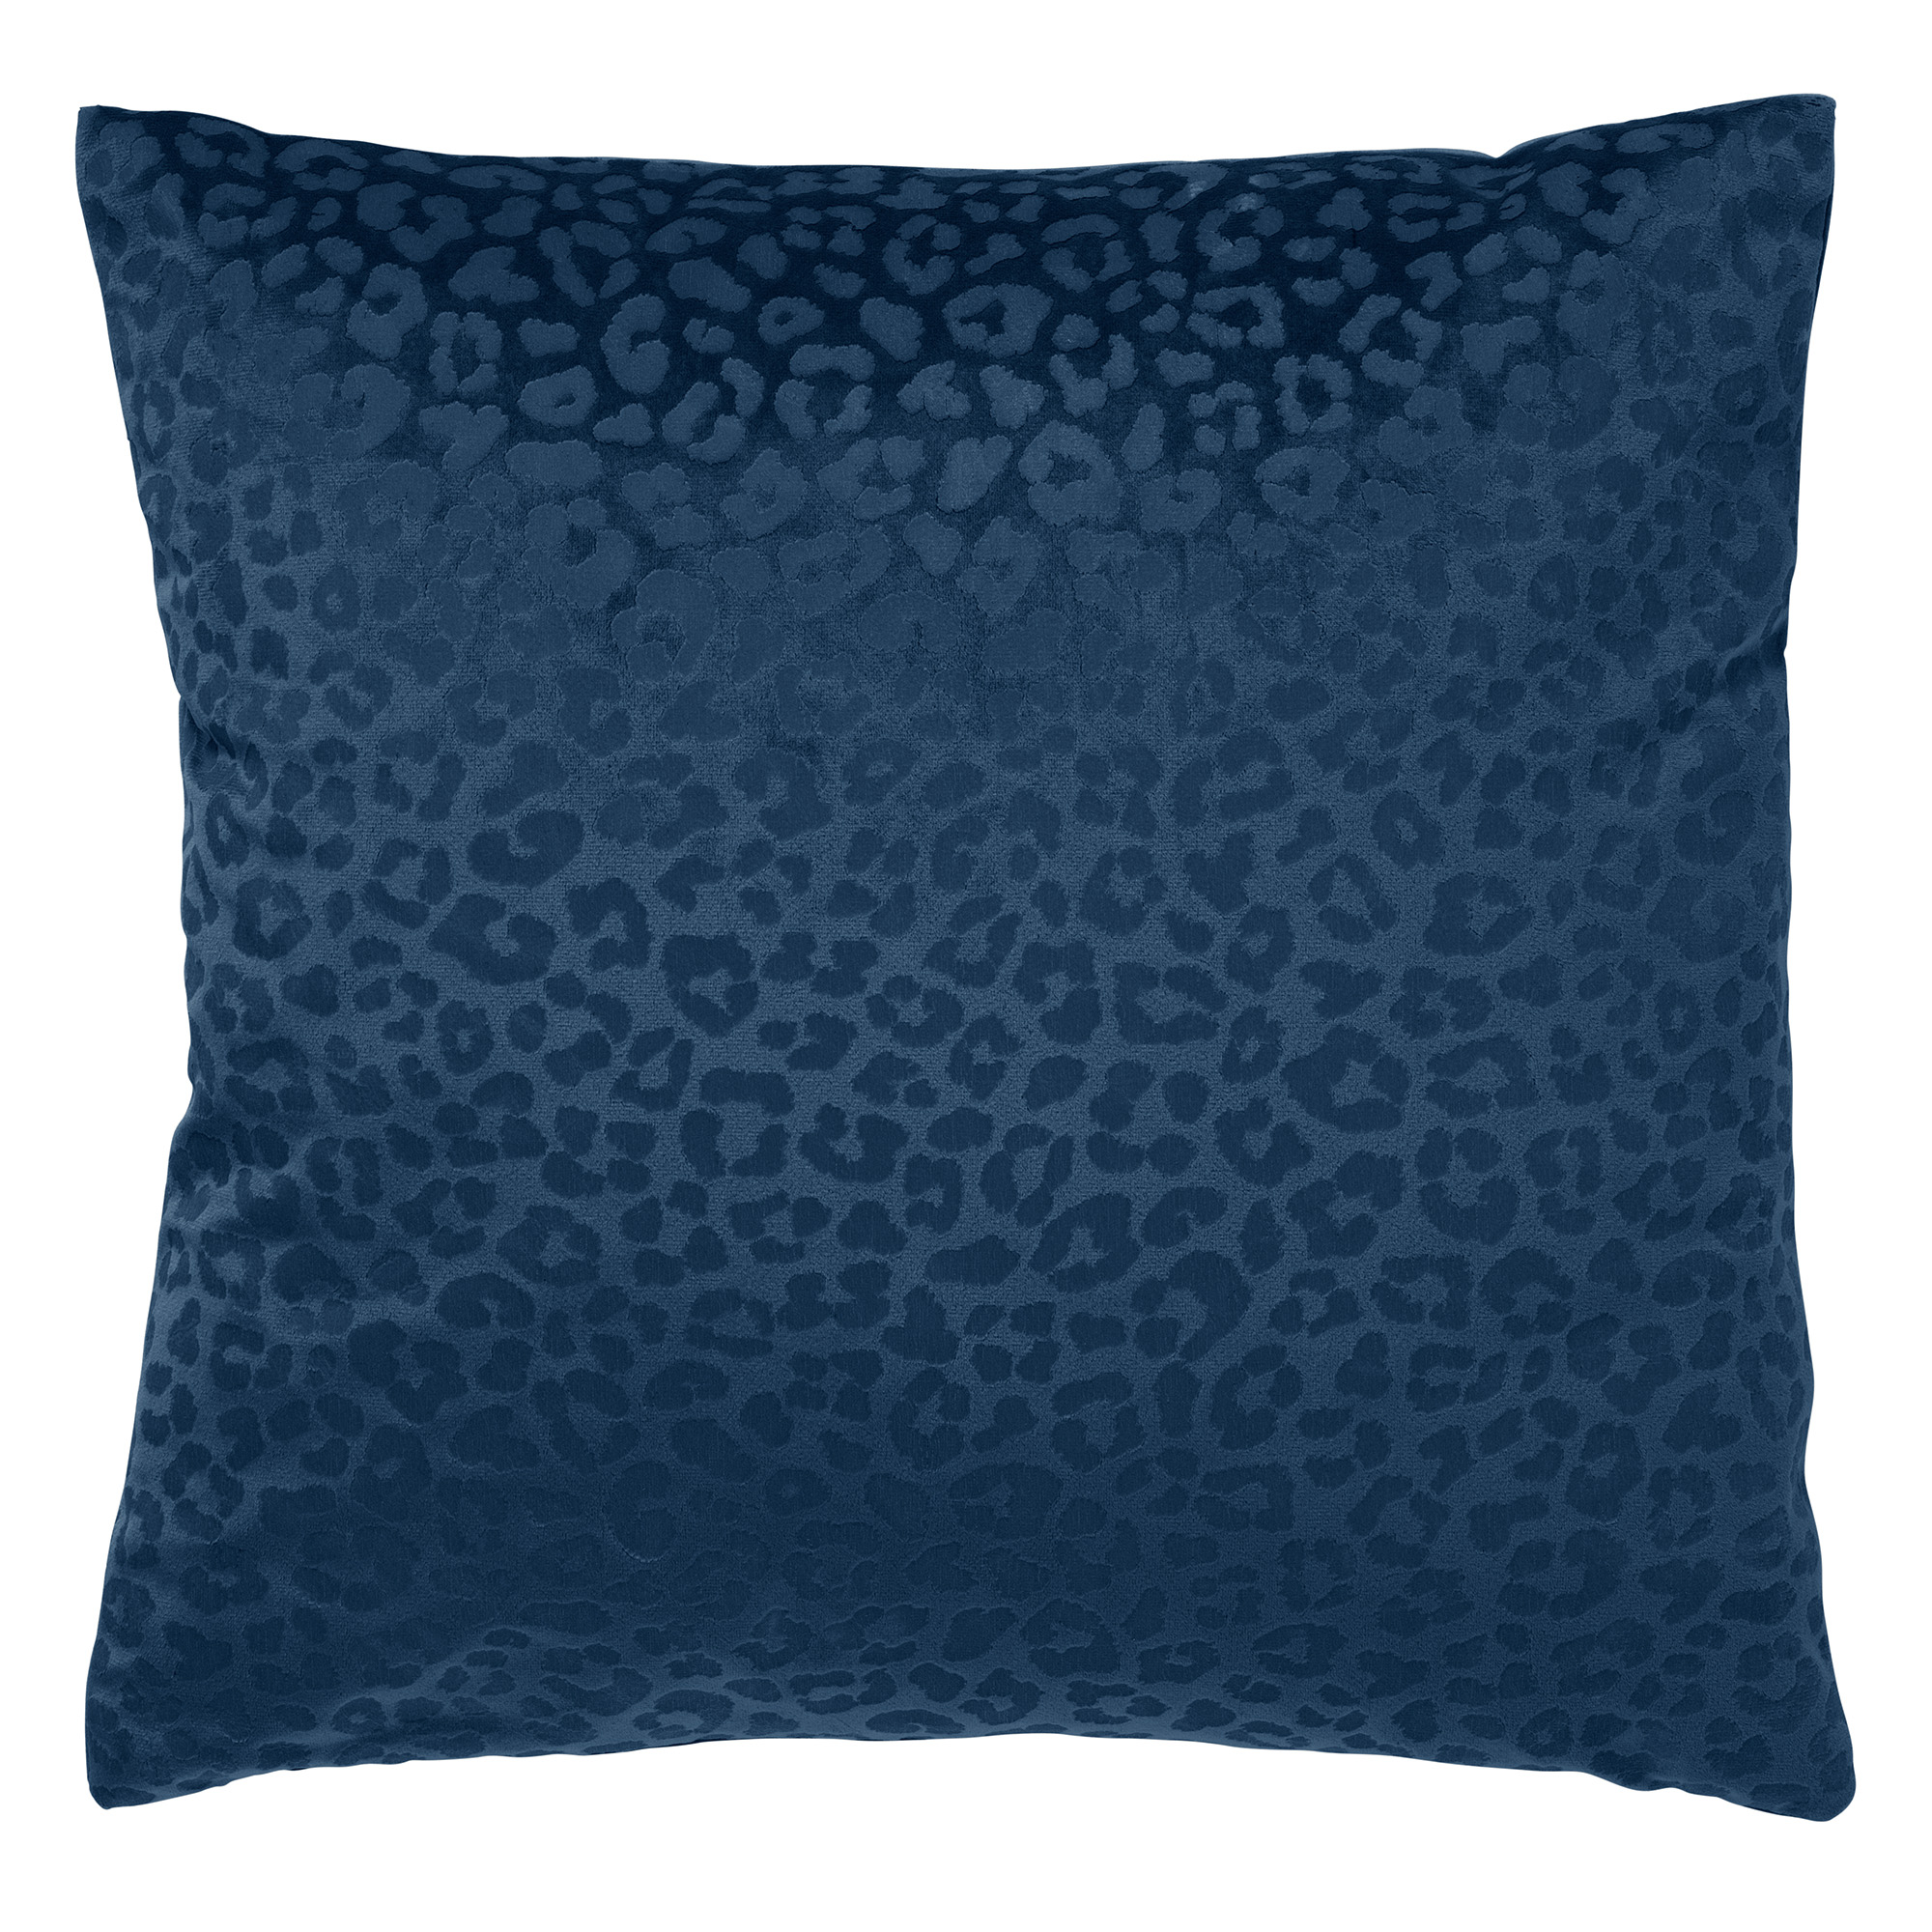 CHESSY - Cushion with animal print 45x45 cm Insignia Blue